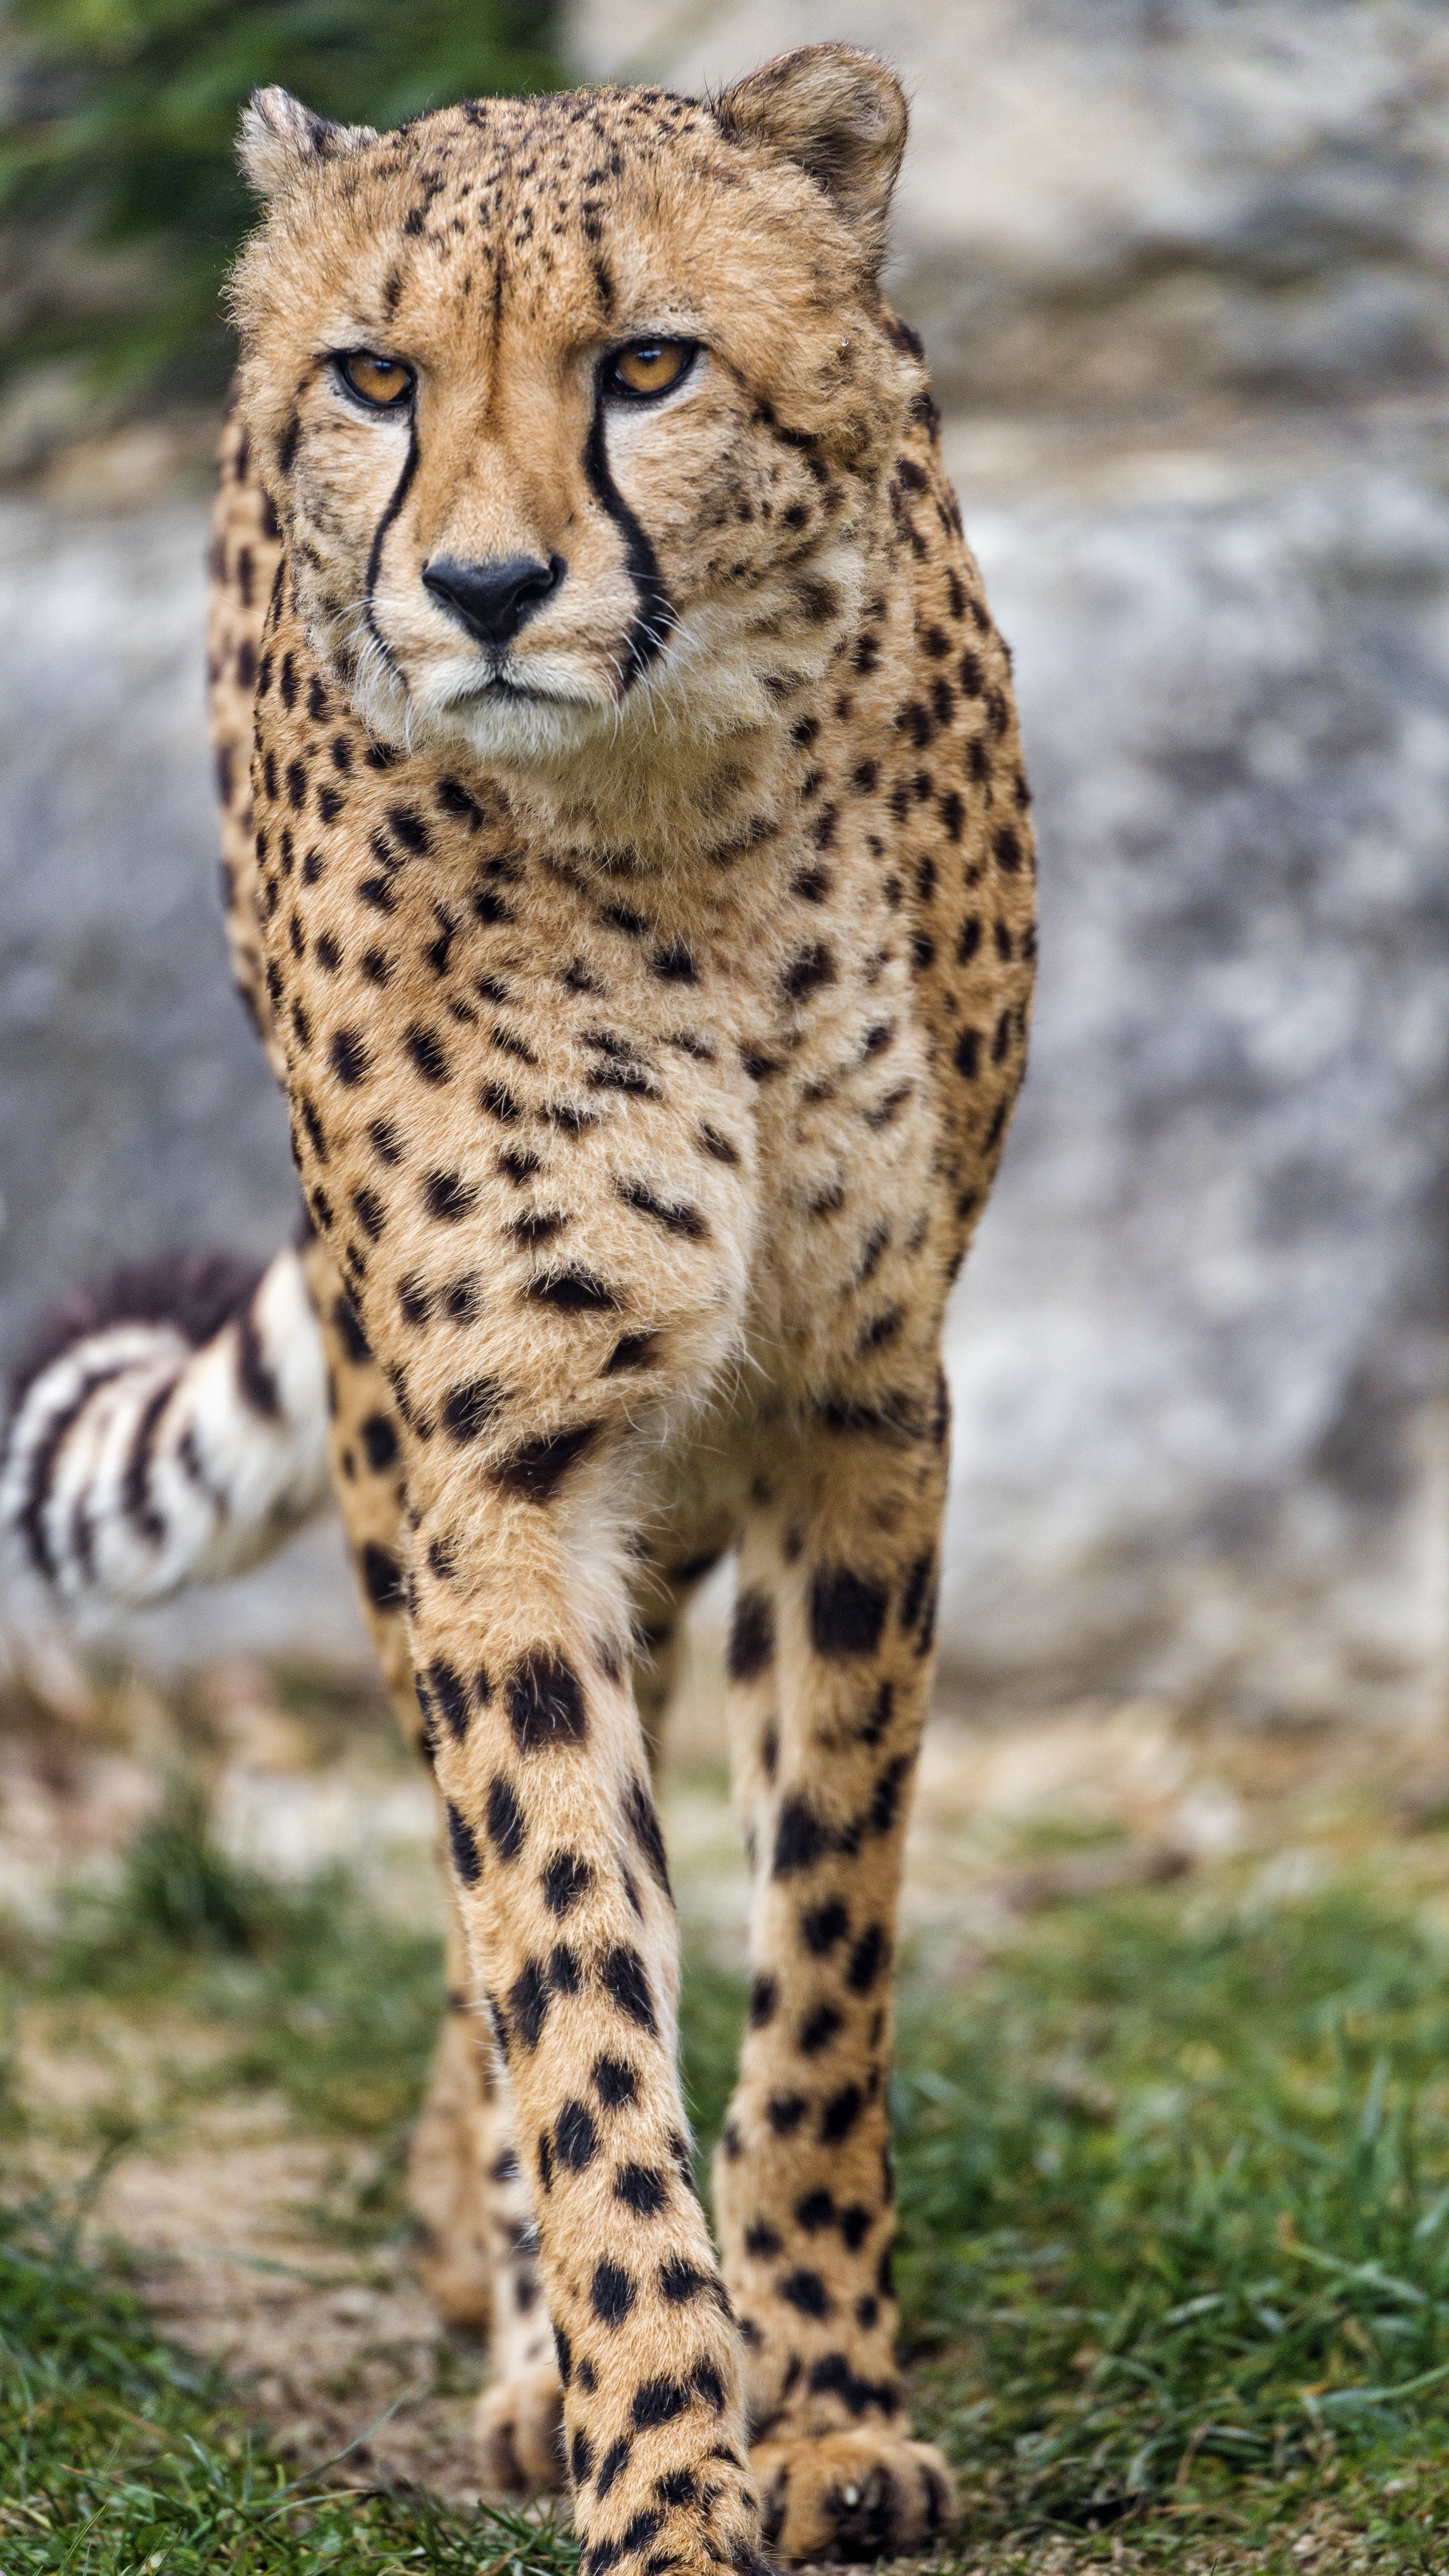 Download Cheetah wallpaper for mobile phone, free Cheetah HD picture